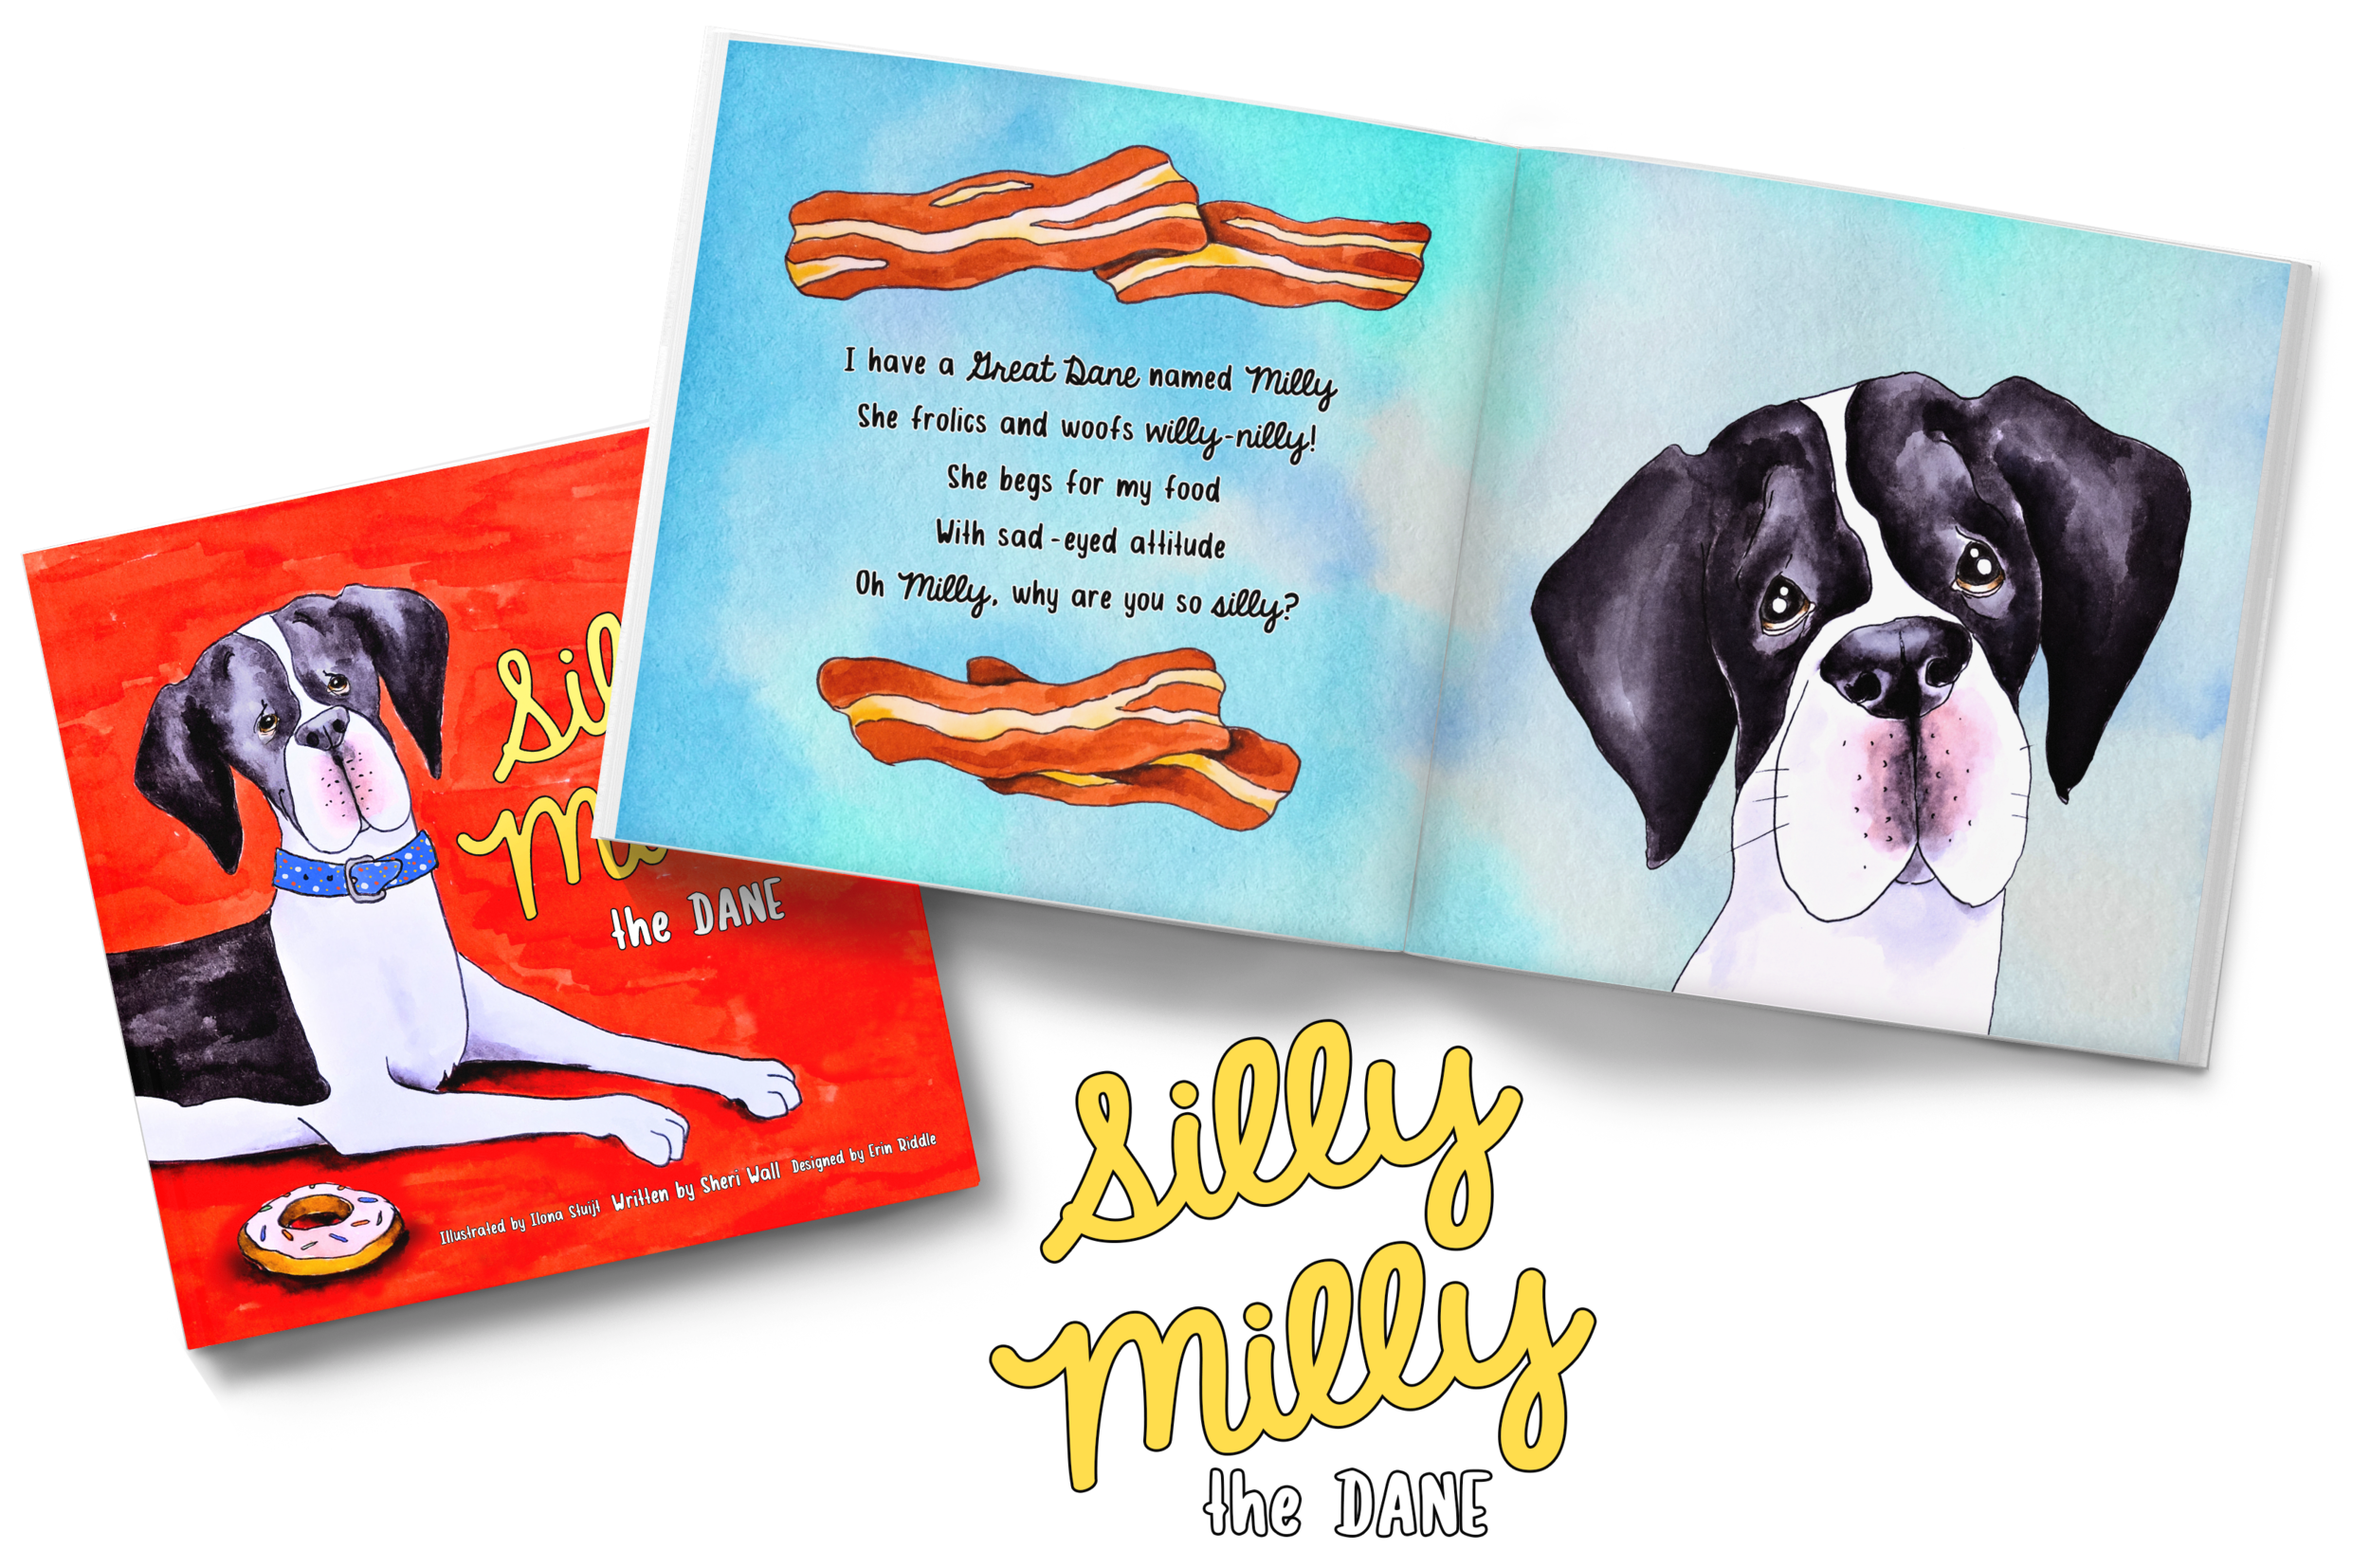 Silly Milly | Sticker